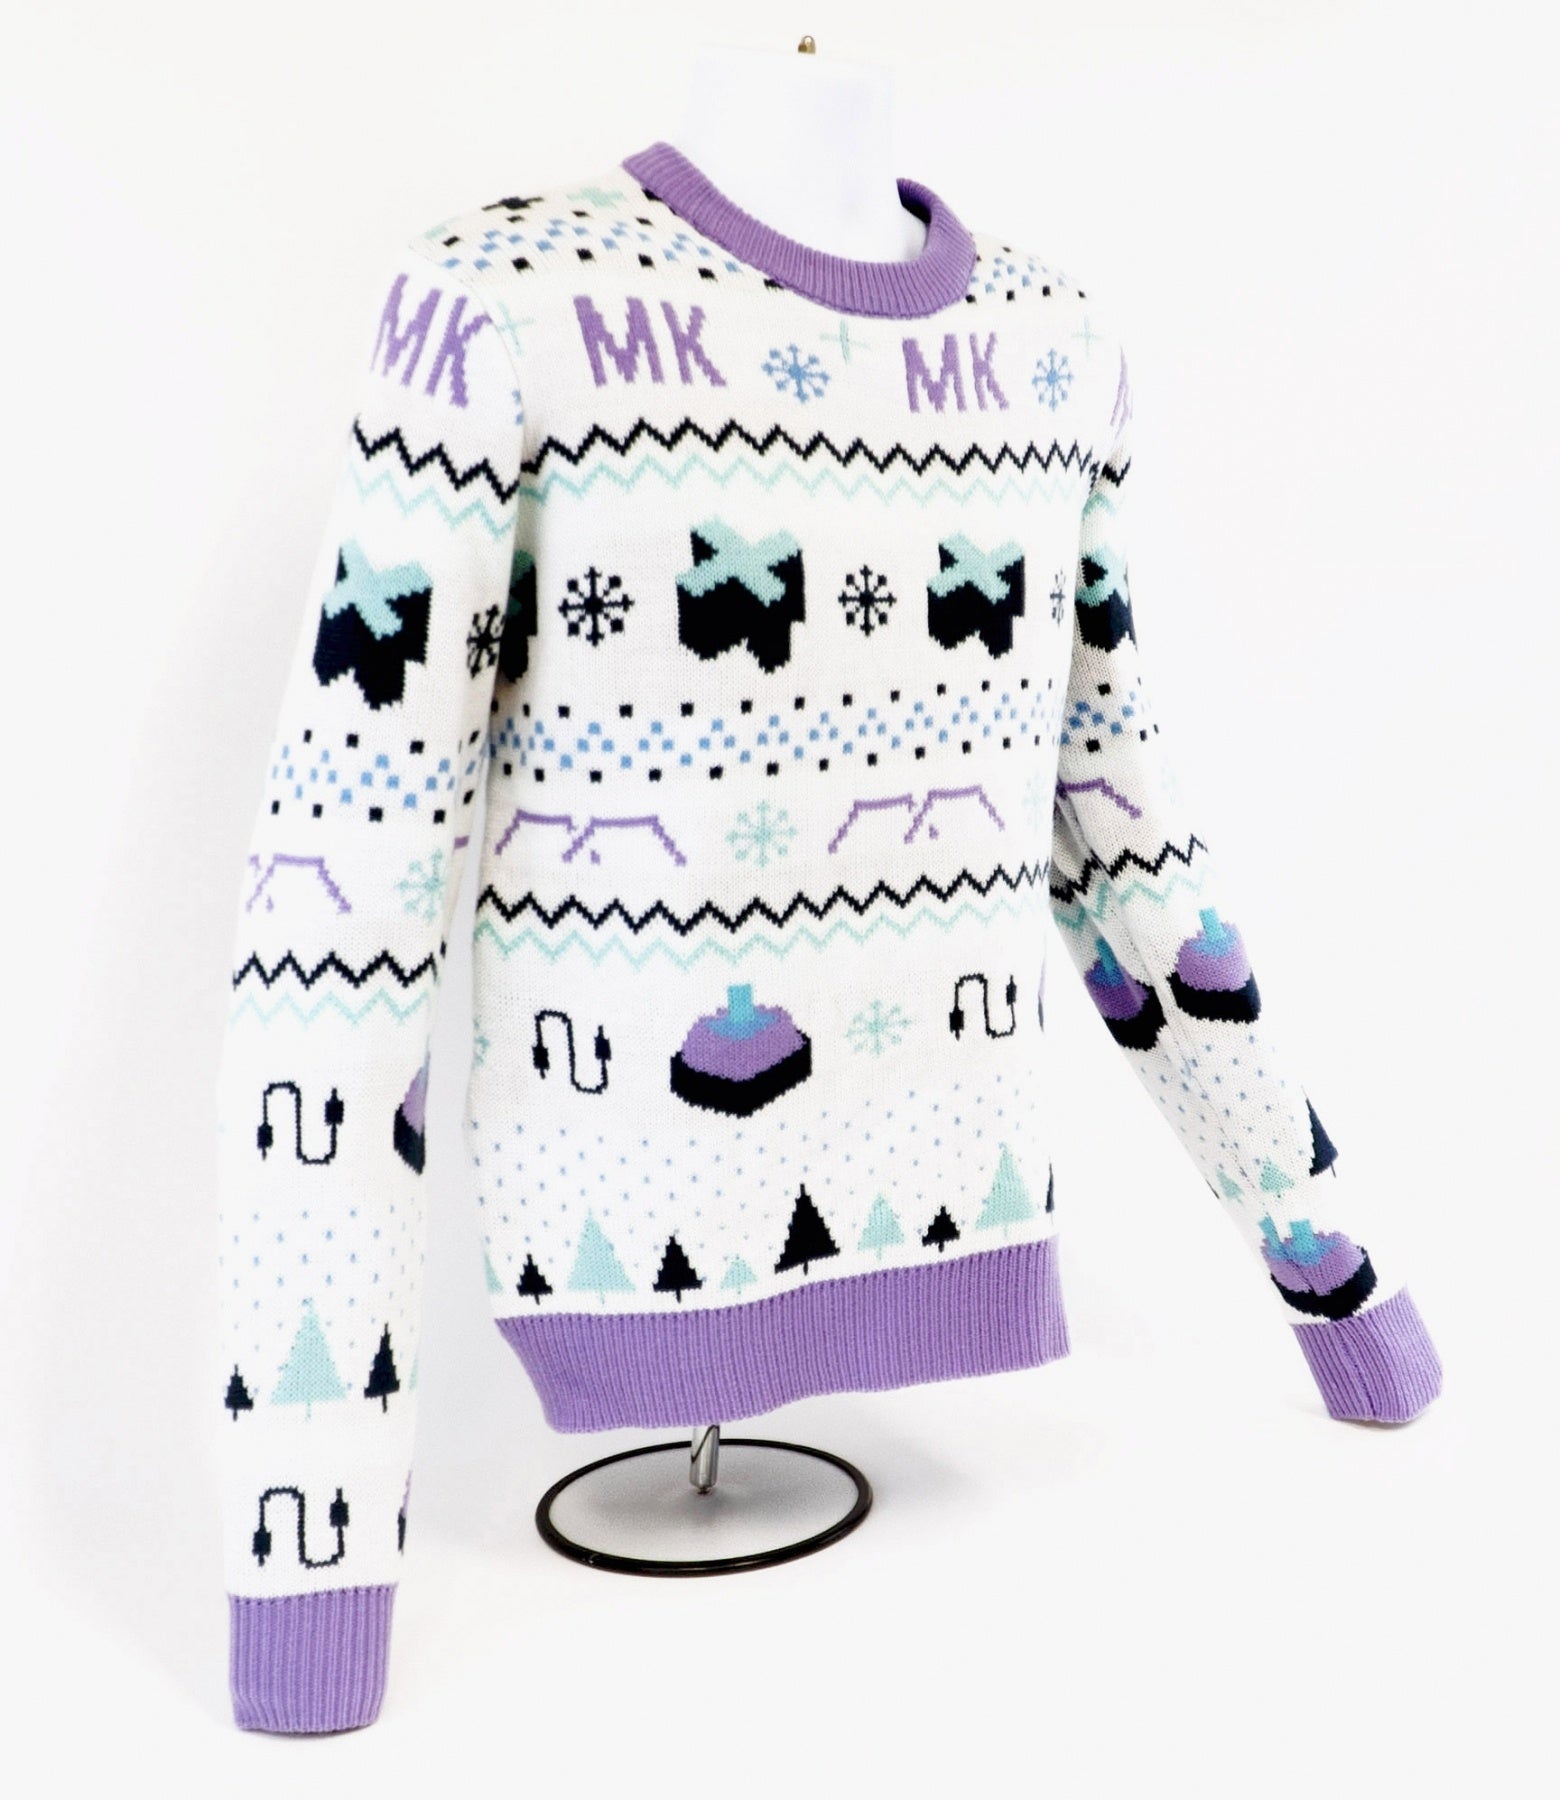 MK Frozen Llama Ugly Christmas Sweater MKZUHNWPVU |0|